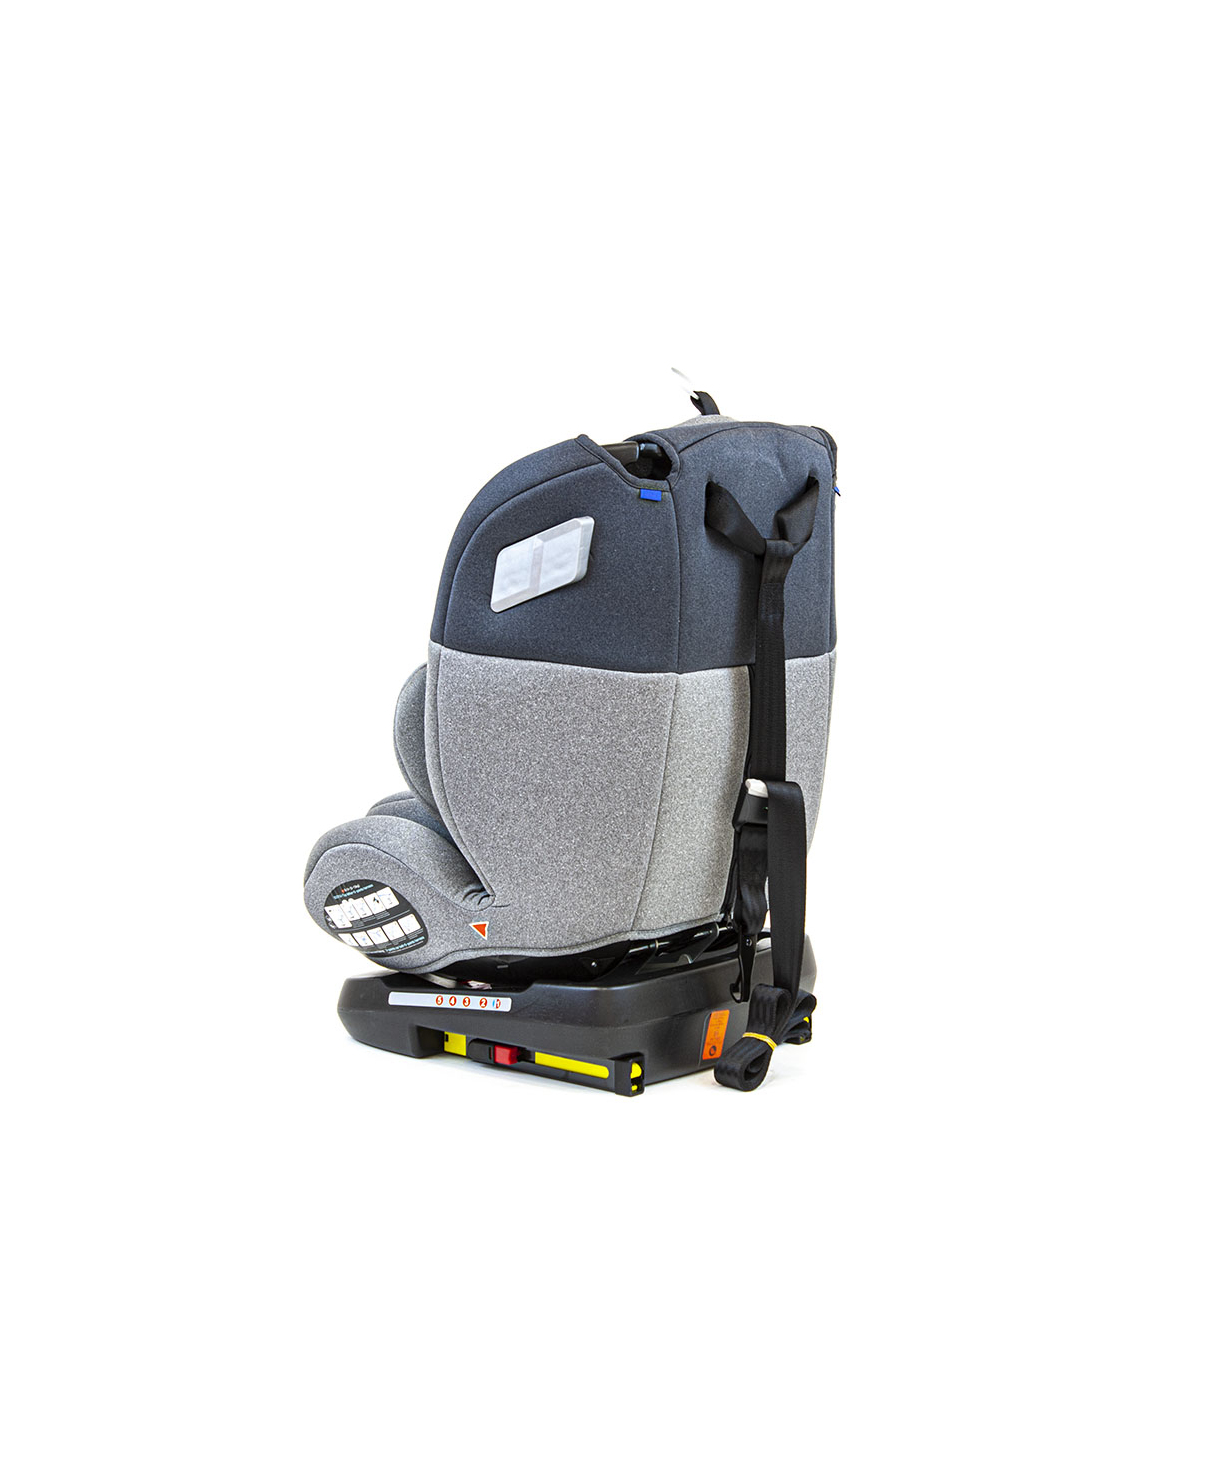 Baby car seat  KBH308